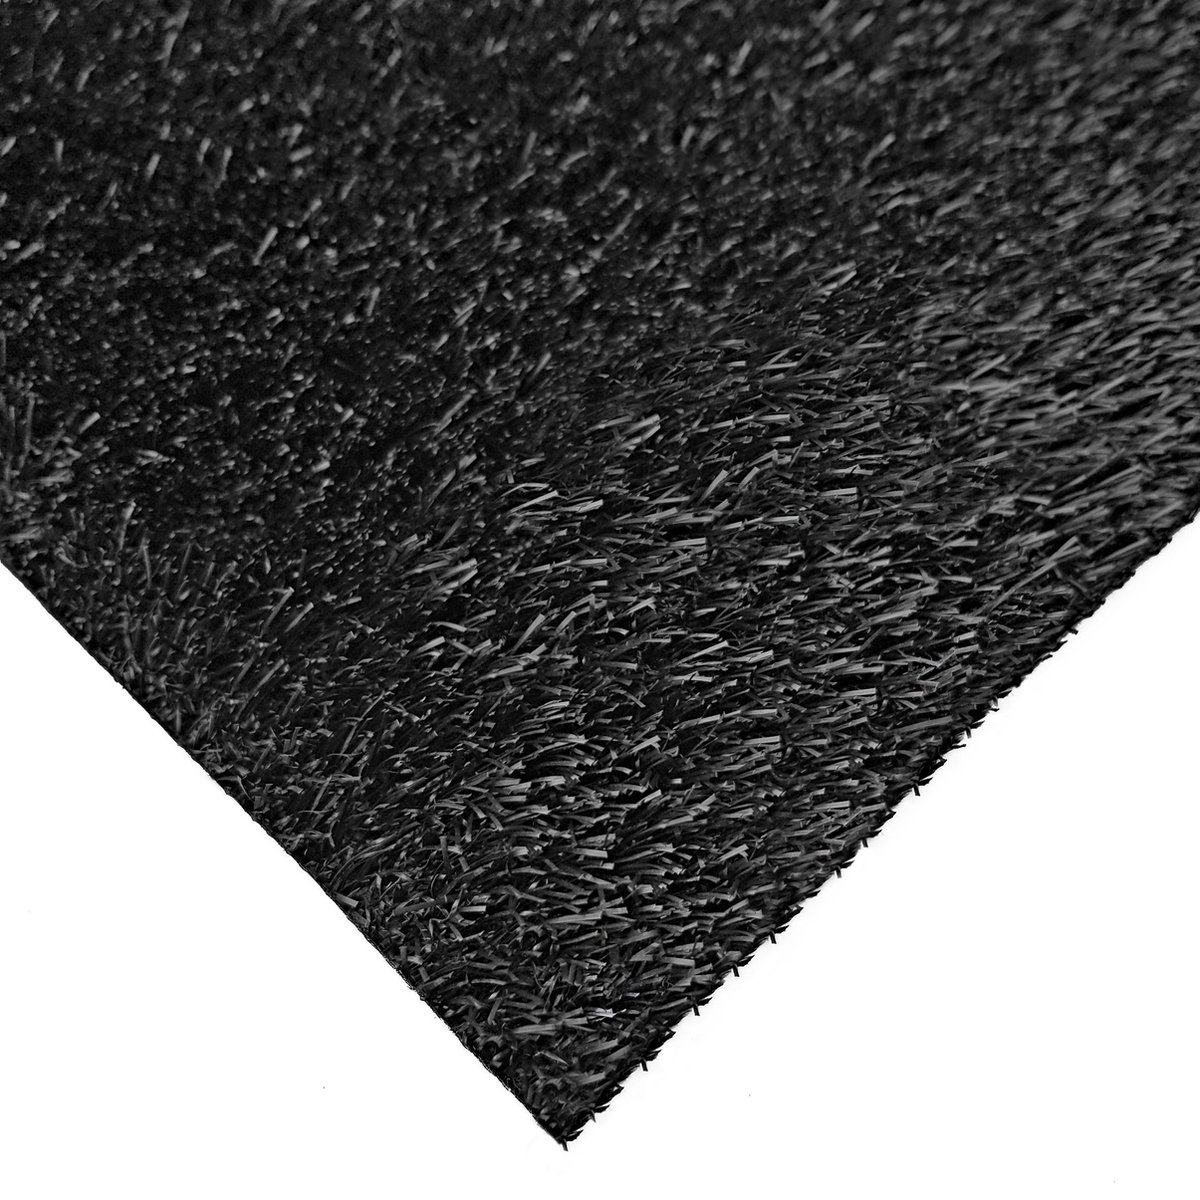 Kunstgras Tapijt RAINBOW Black Shadow - 2x15M - 25mm|artificial grass|gazon artificiel|....|tuin|balkon|terras|kinderkamer|speelkamer|grastapijt|grasmat|buiten|binnen|kerst